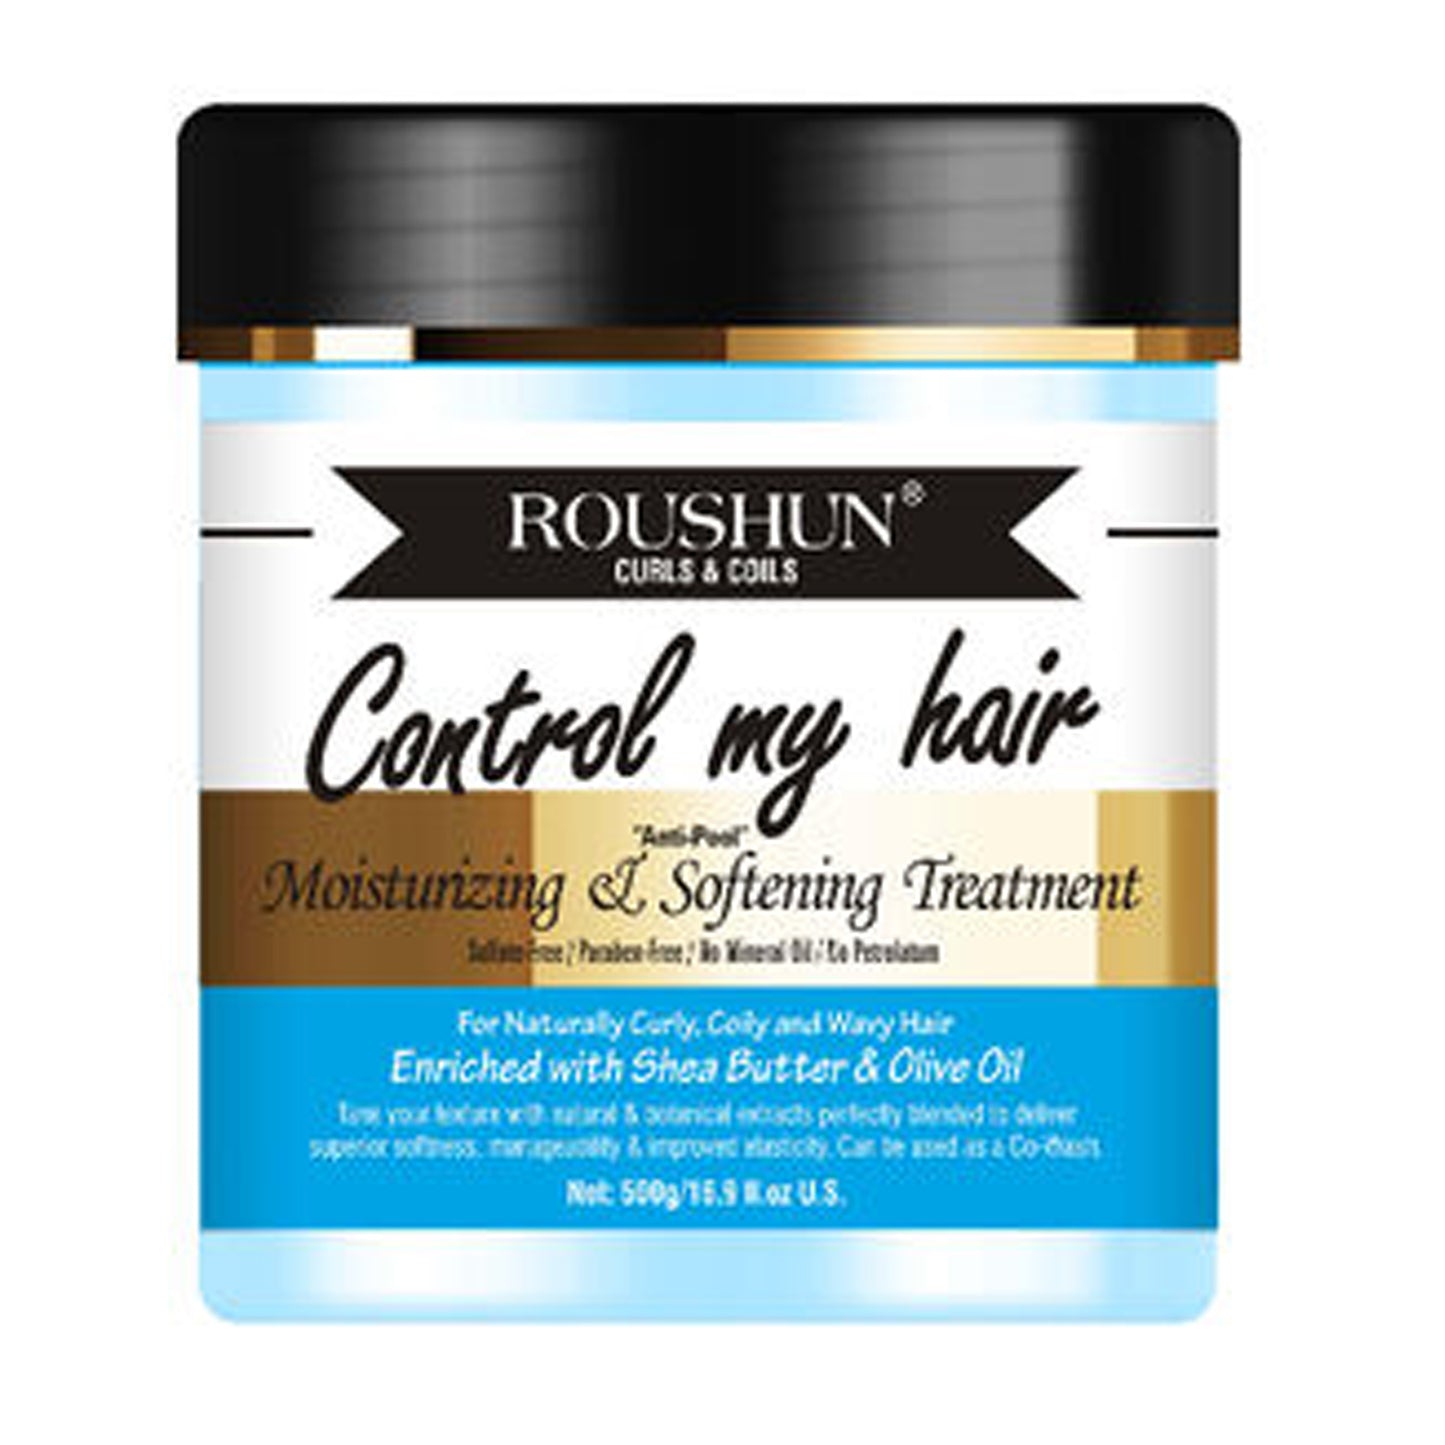 ROUSHUN CURLS & COILS - CONTROL MY HAIR ANTI-POOL MOISTURIZING & SOFTENING TREATMENT HAIR MASK - 500G